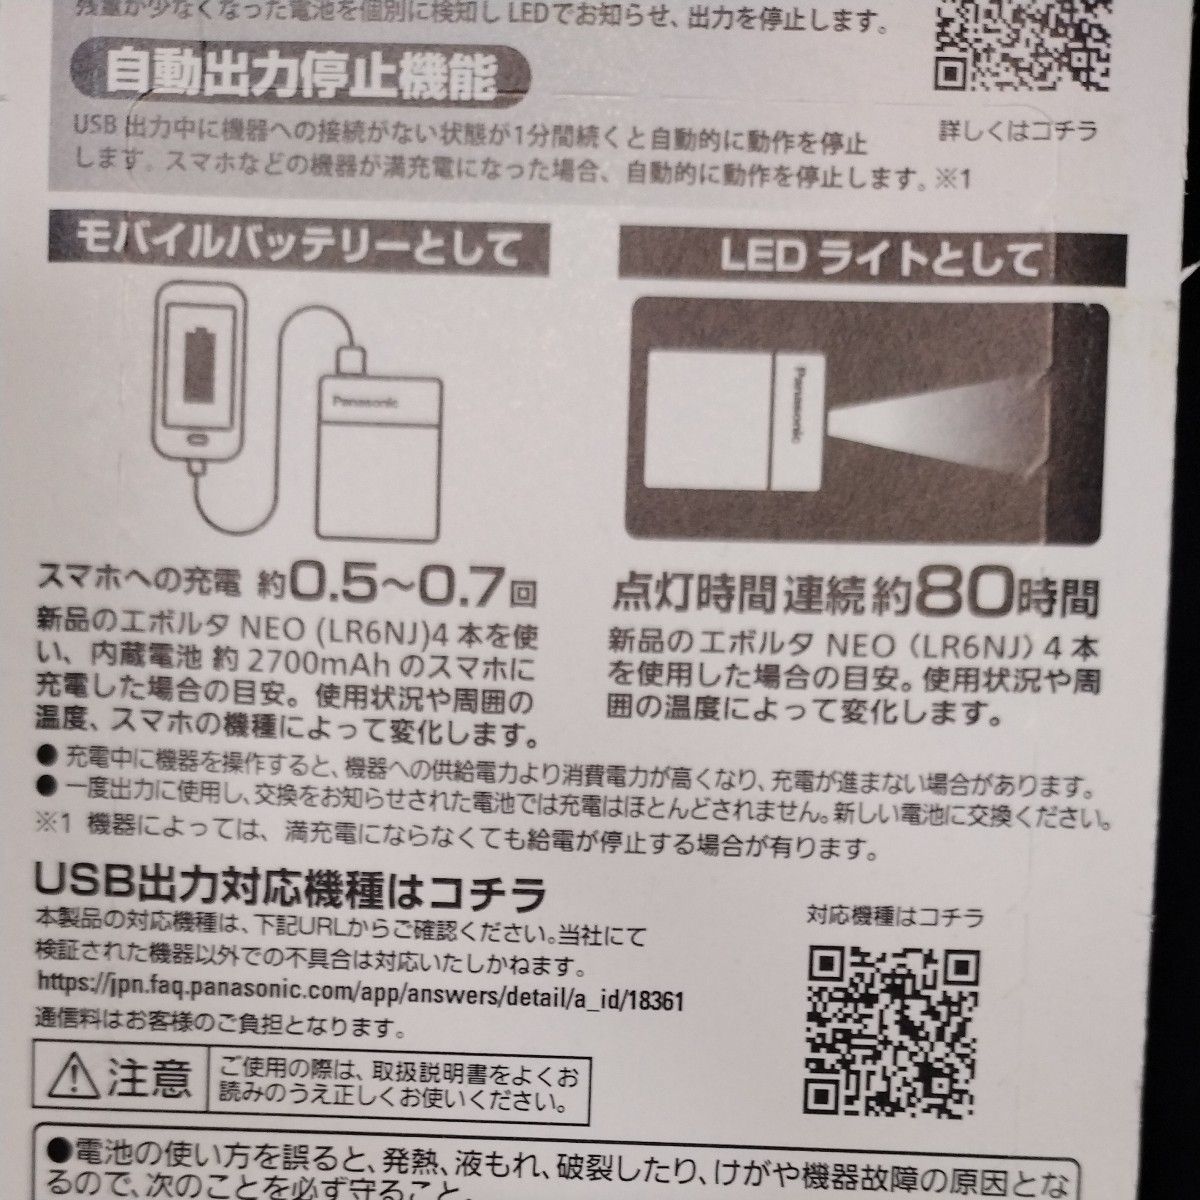 BH-BZ40K （乾電池式モバイルバッテリー ホワイト） LEDライトになる 乾電池式モバイルバッテリー パナソニック充電器